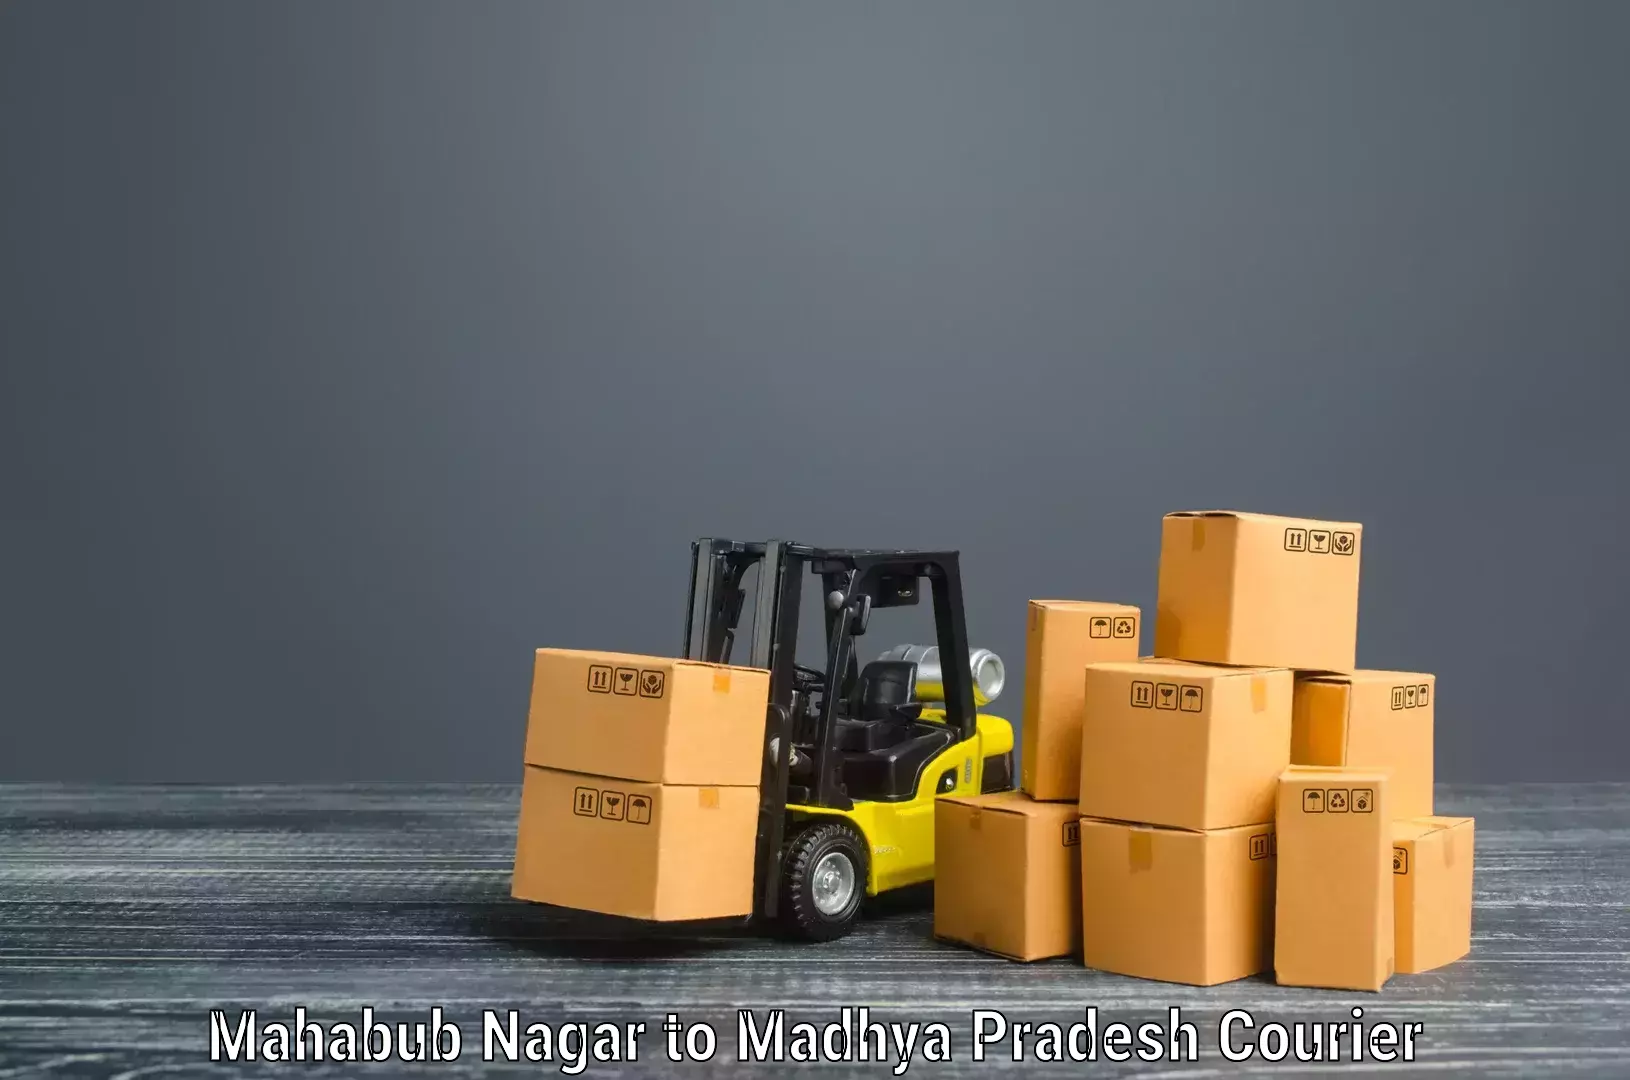 Furniture delivery service in Mahabub Nagar to Chand Chaurai